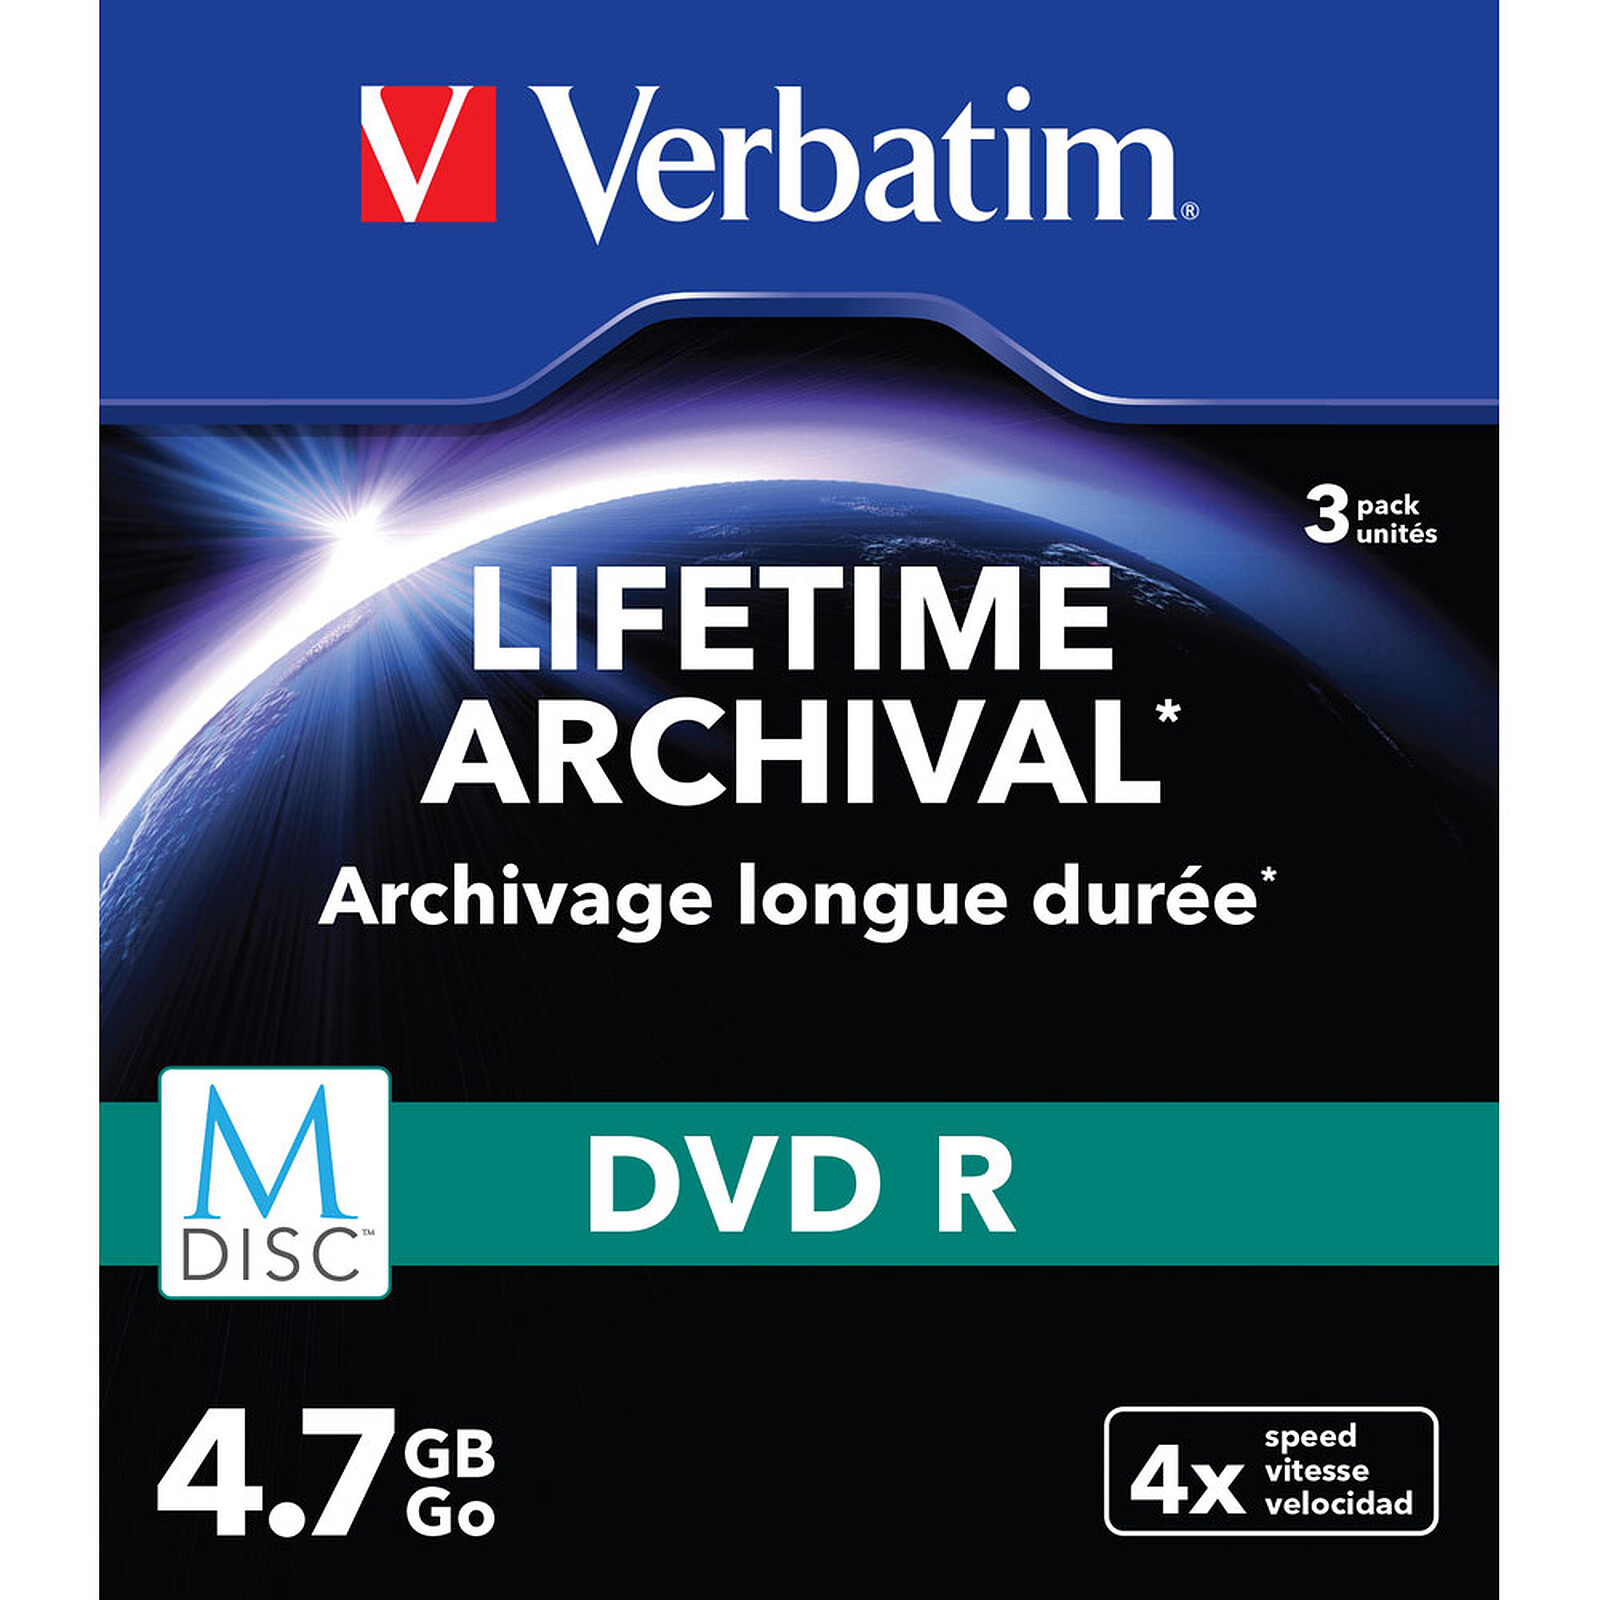 Verbatim MDISC DVD R 4.7 Go (par 3, boitiers Slim) - DVD vierge - LDLC